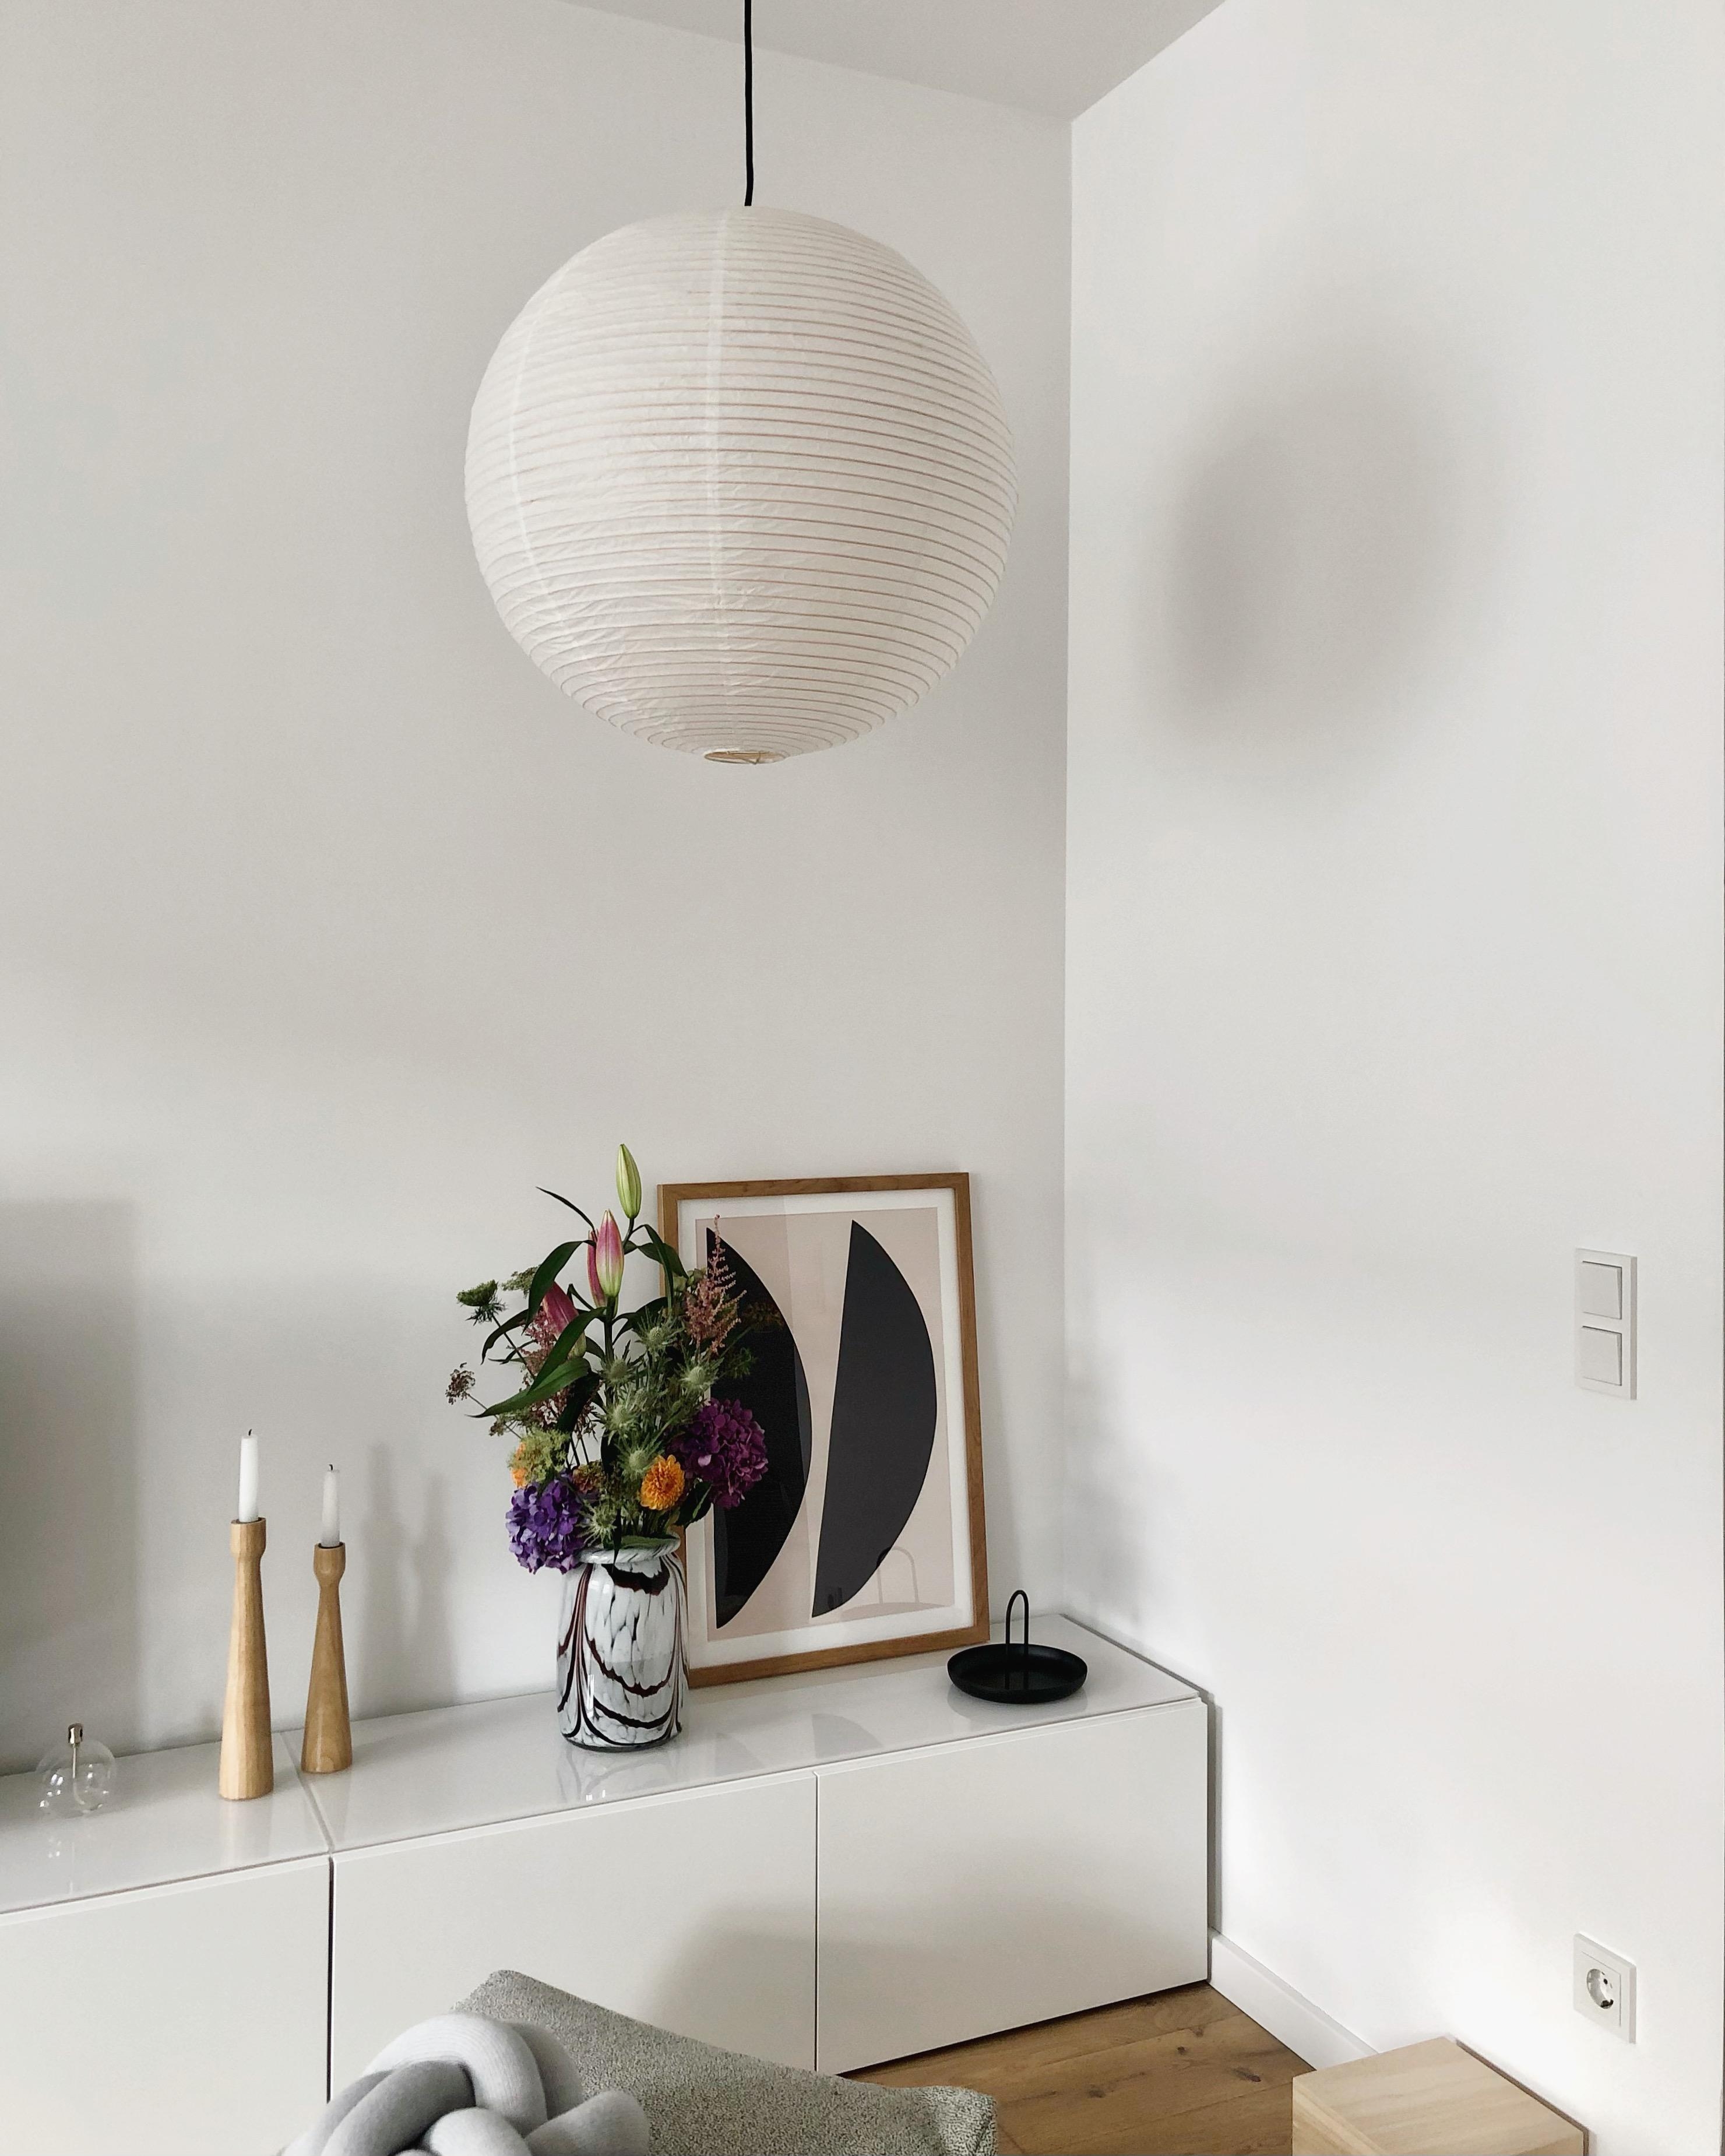 #wohnzimmer #livingroom #ikeabesta #freshflowers #minimalism #dekoidee #whiteliving #interior #nordicliving #couchstyle